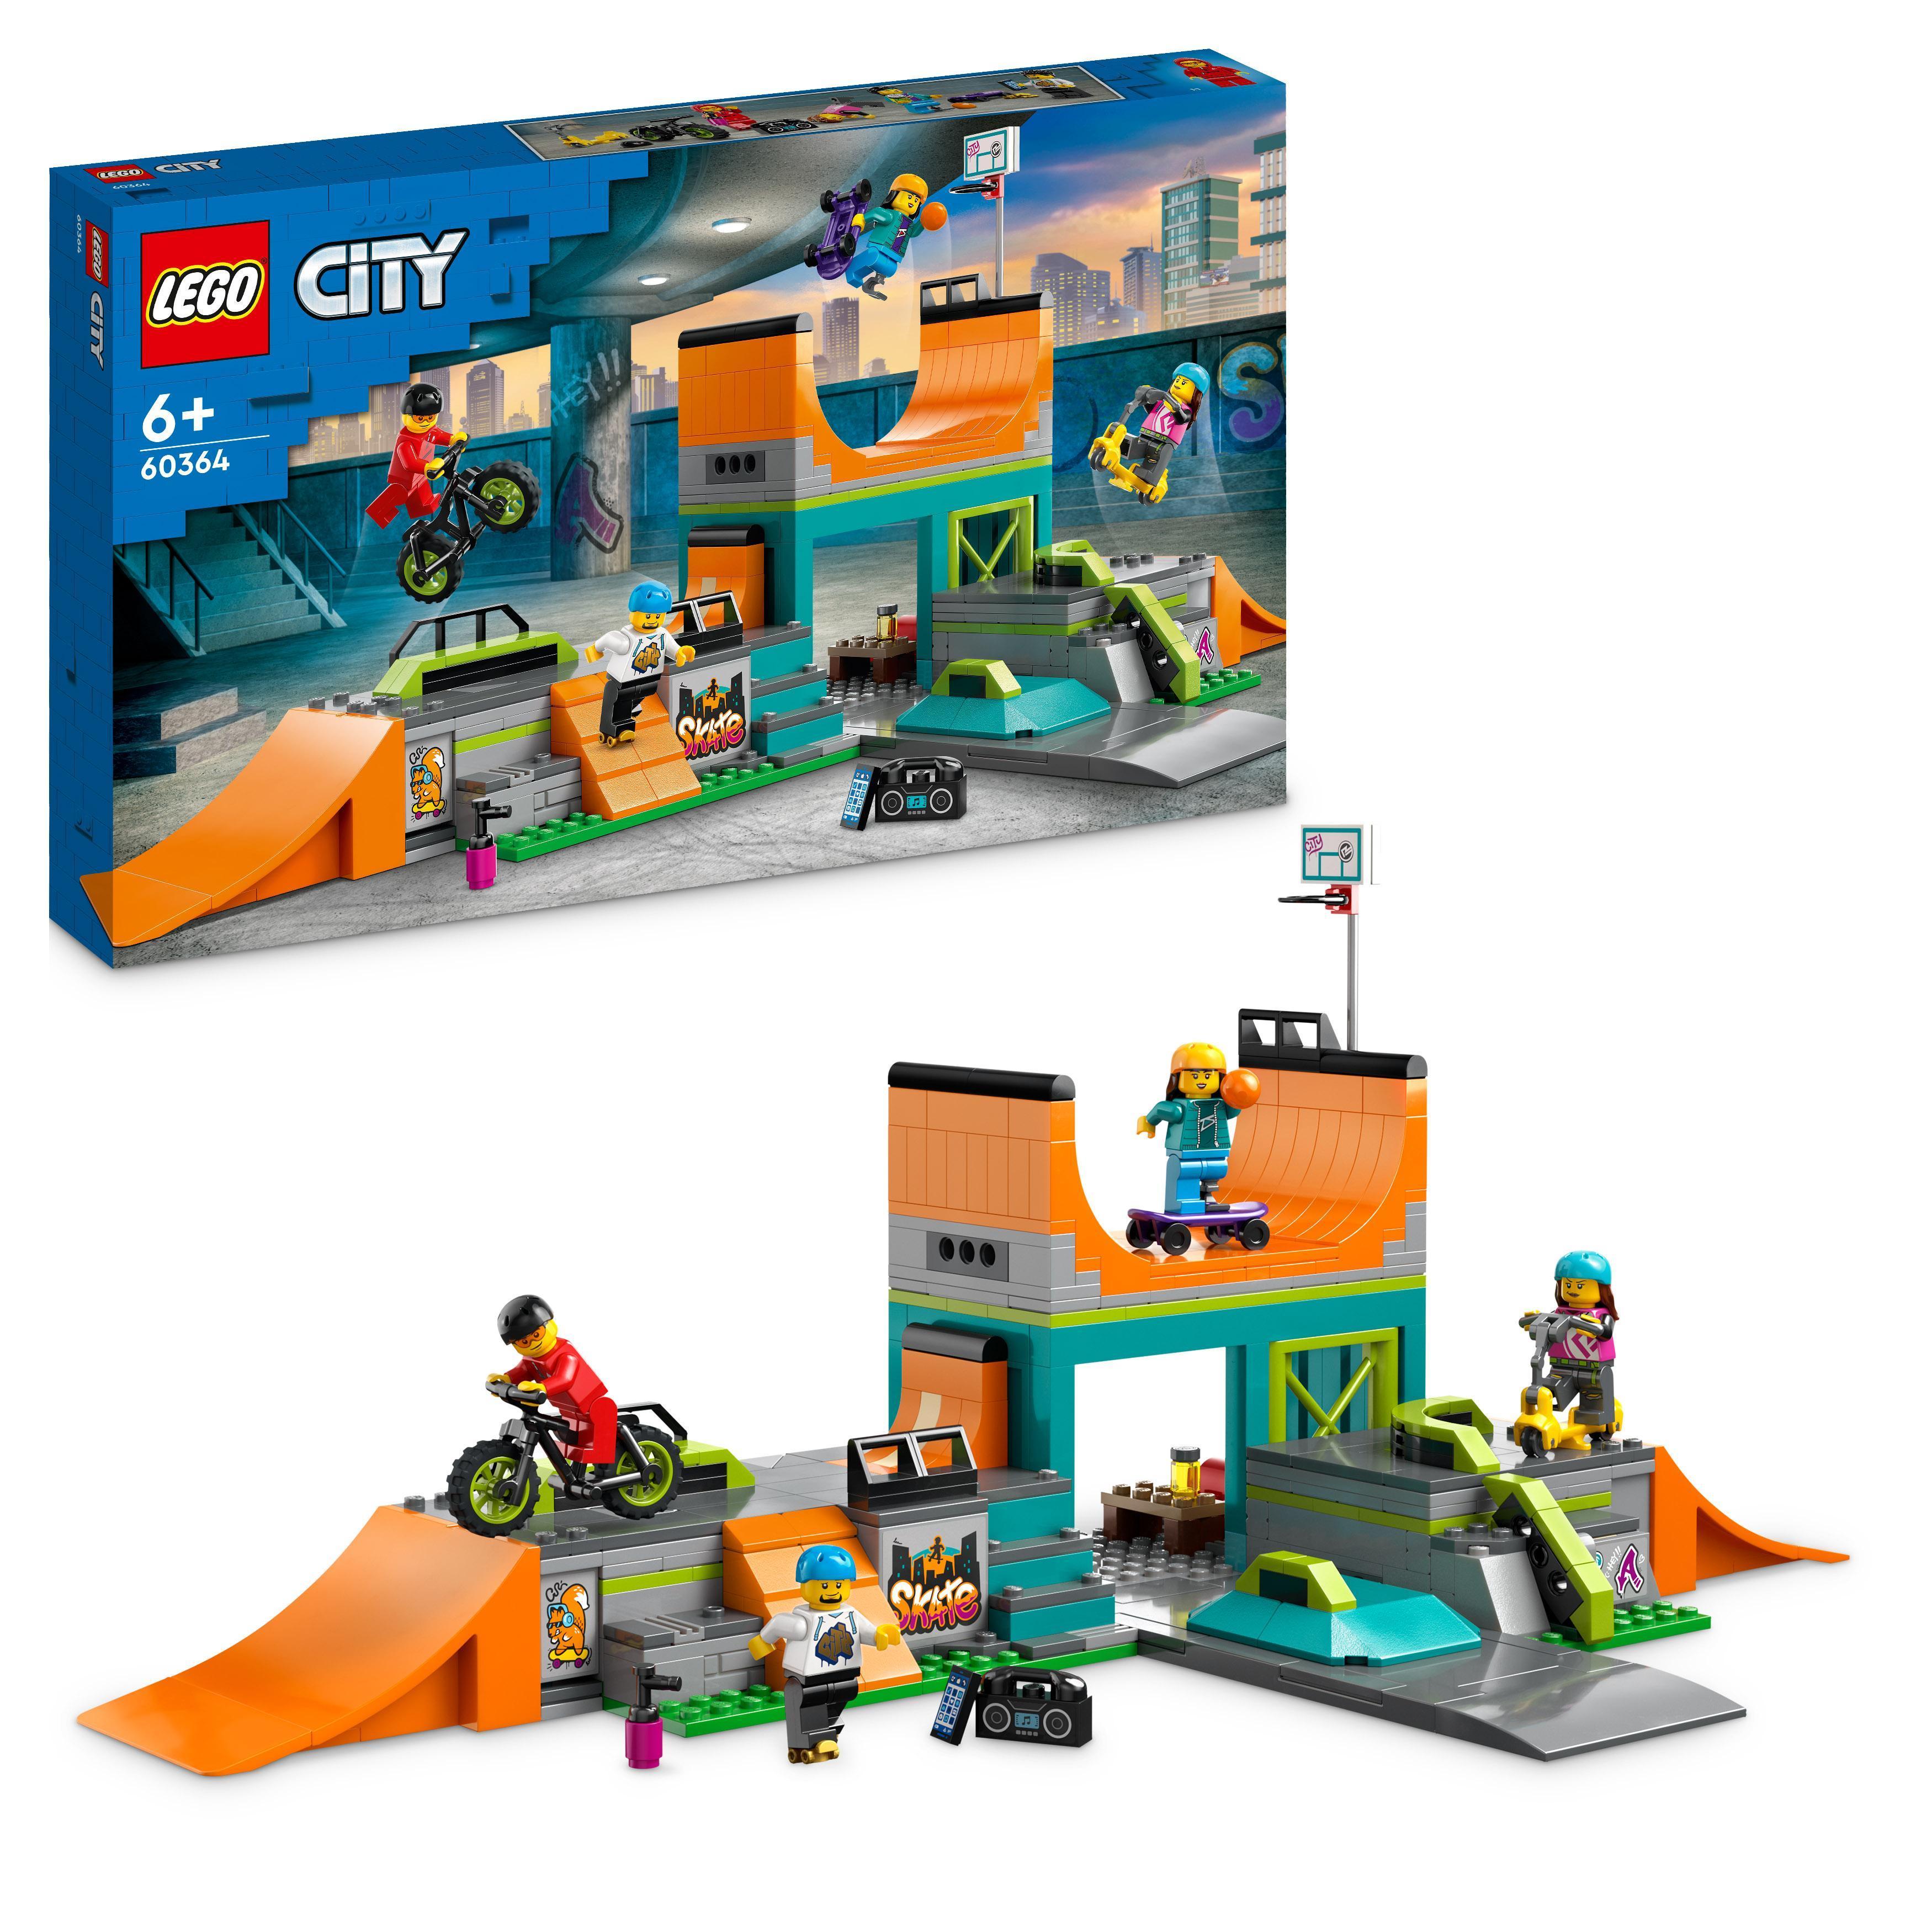 LEGO City - Skatepark (60364)